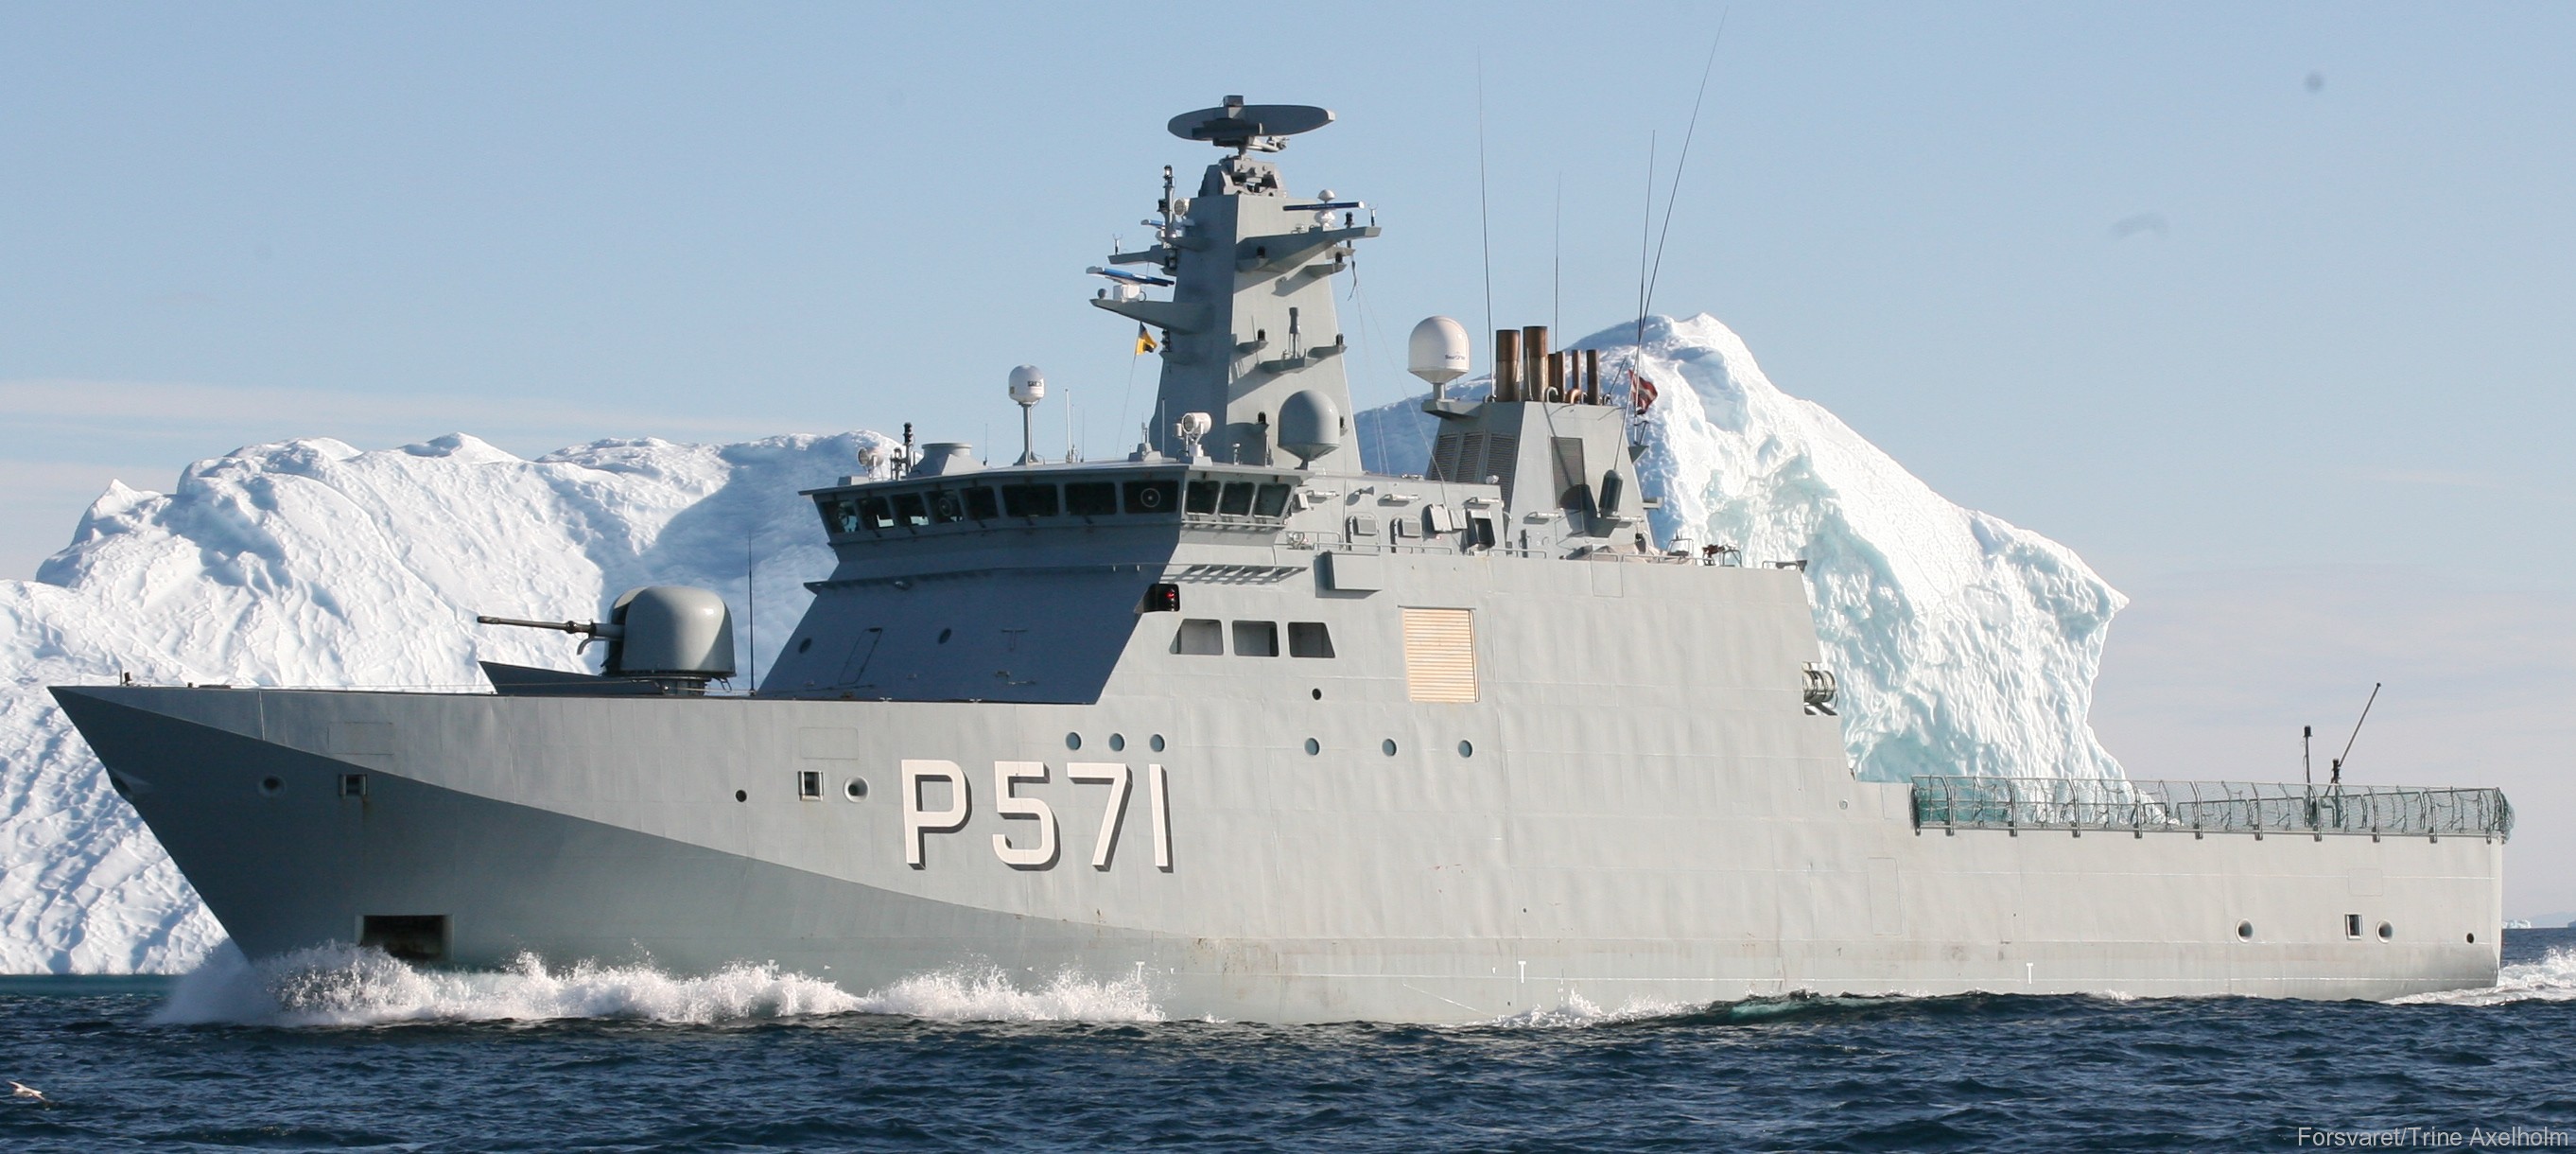 p-571 hdms ejnar mikkelsen knud rasmussen class offshore patrol vessel opv royal danish navy inspektionsfartøj 28